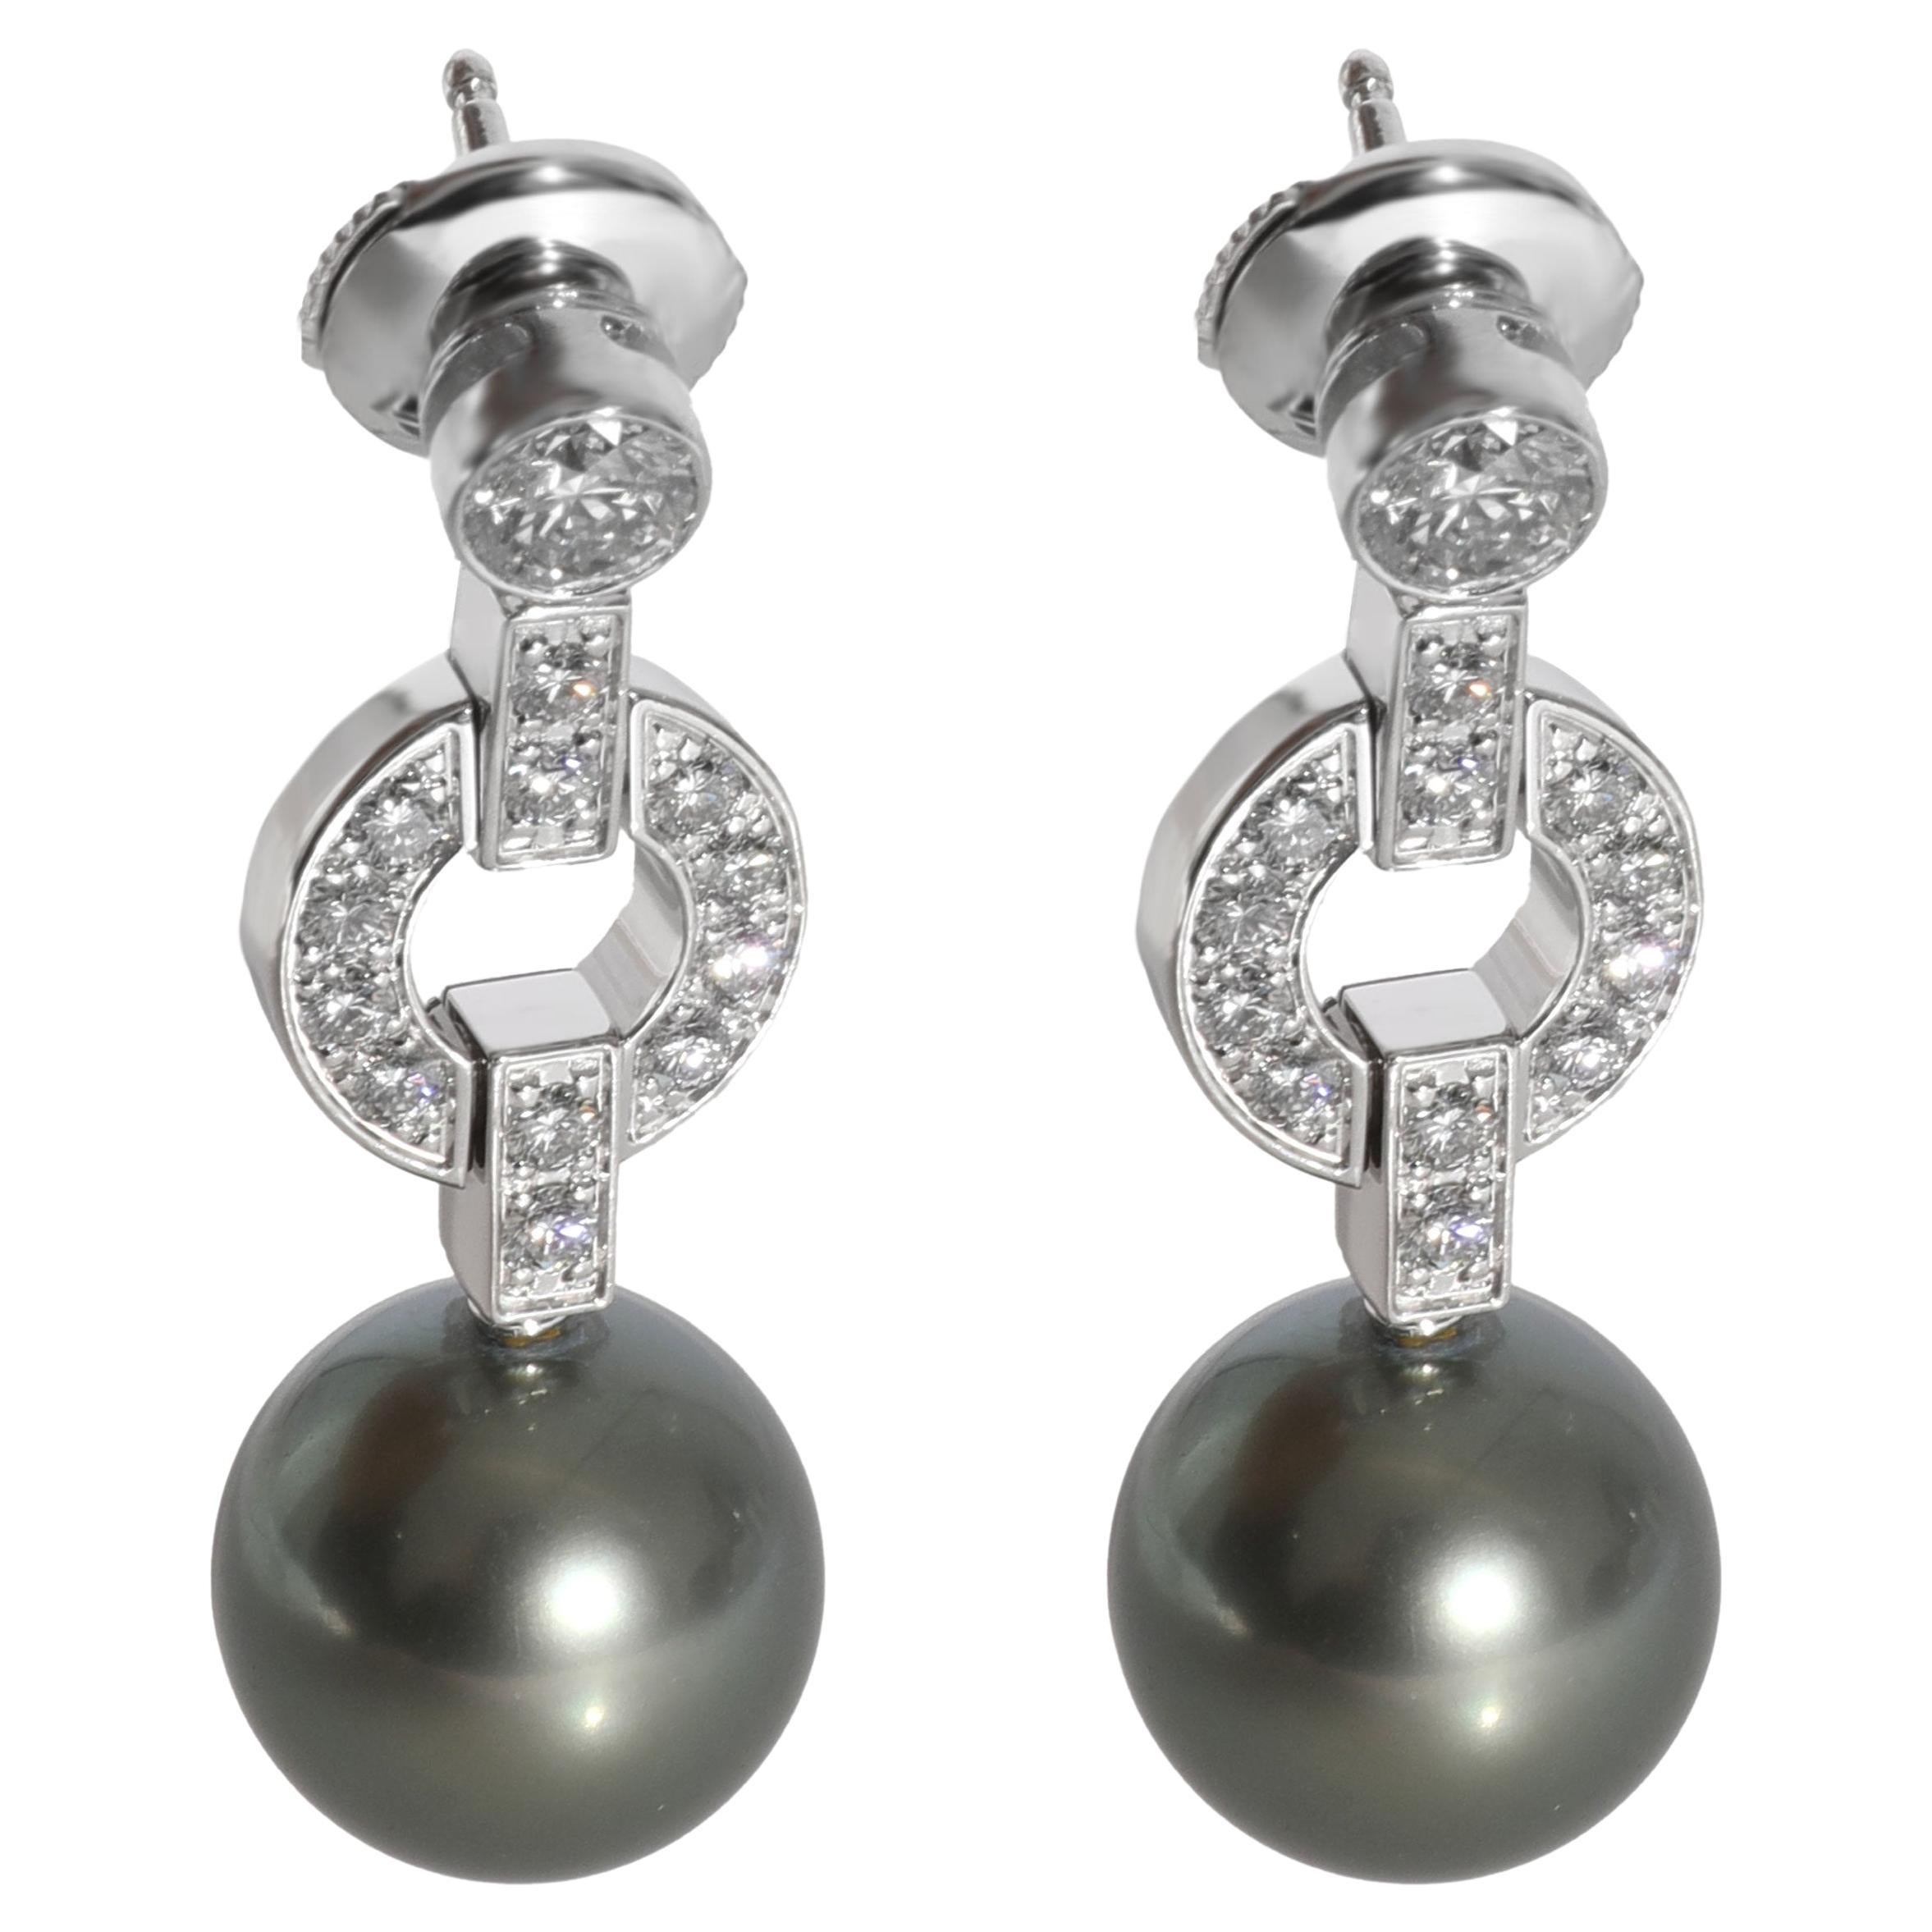 Cartier Himalia Pearl Diamond Earrings in 18k White Gold 0.85 CTW